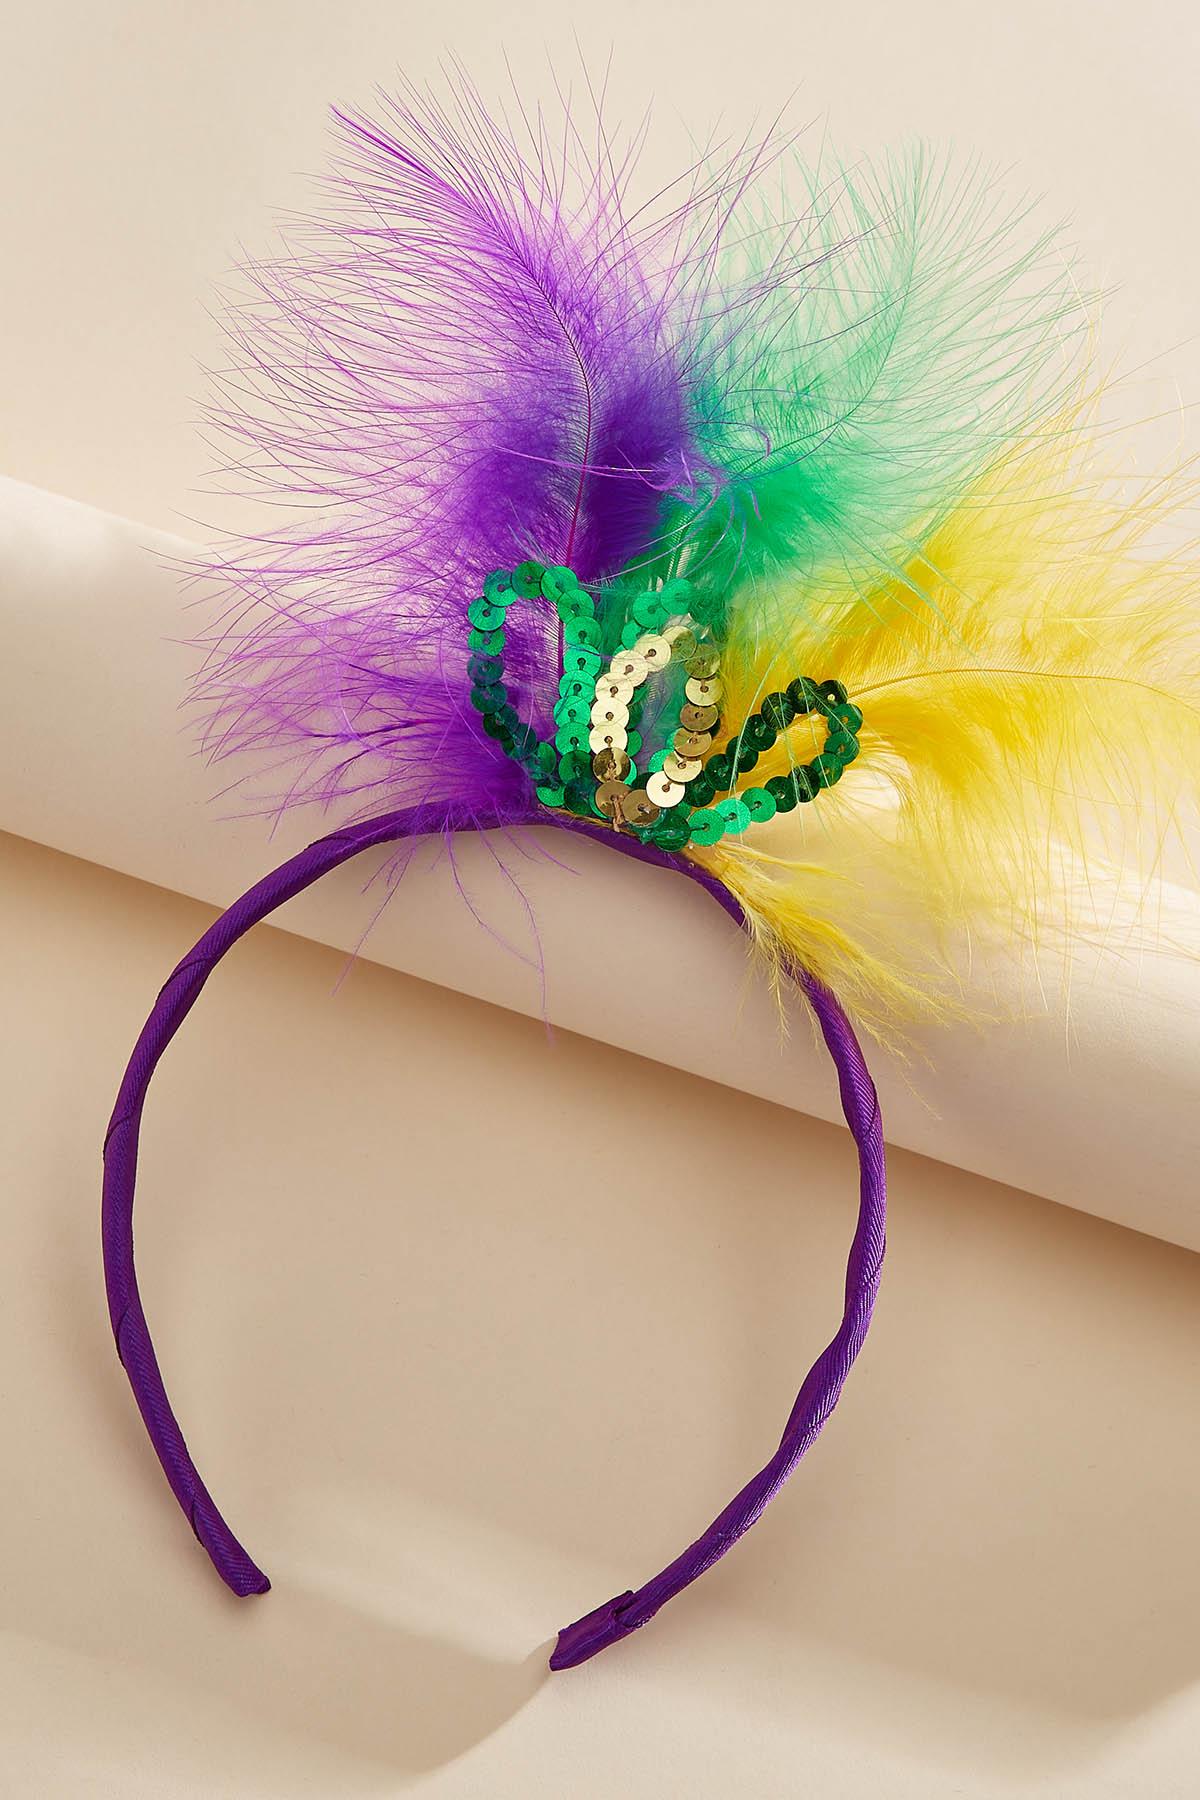 J Hat Mardi Gras Crown Headband - Green Yellow Purple OSFM